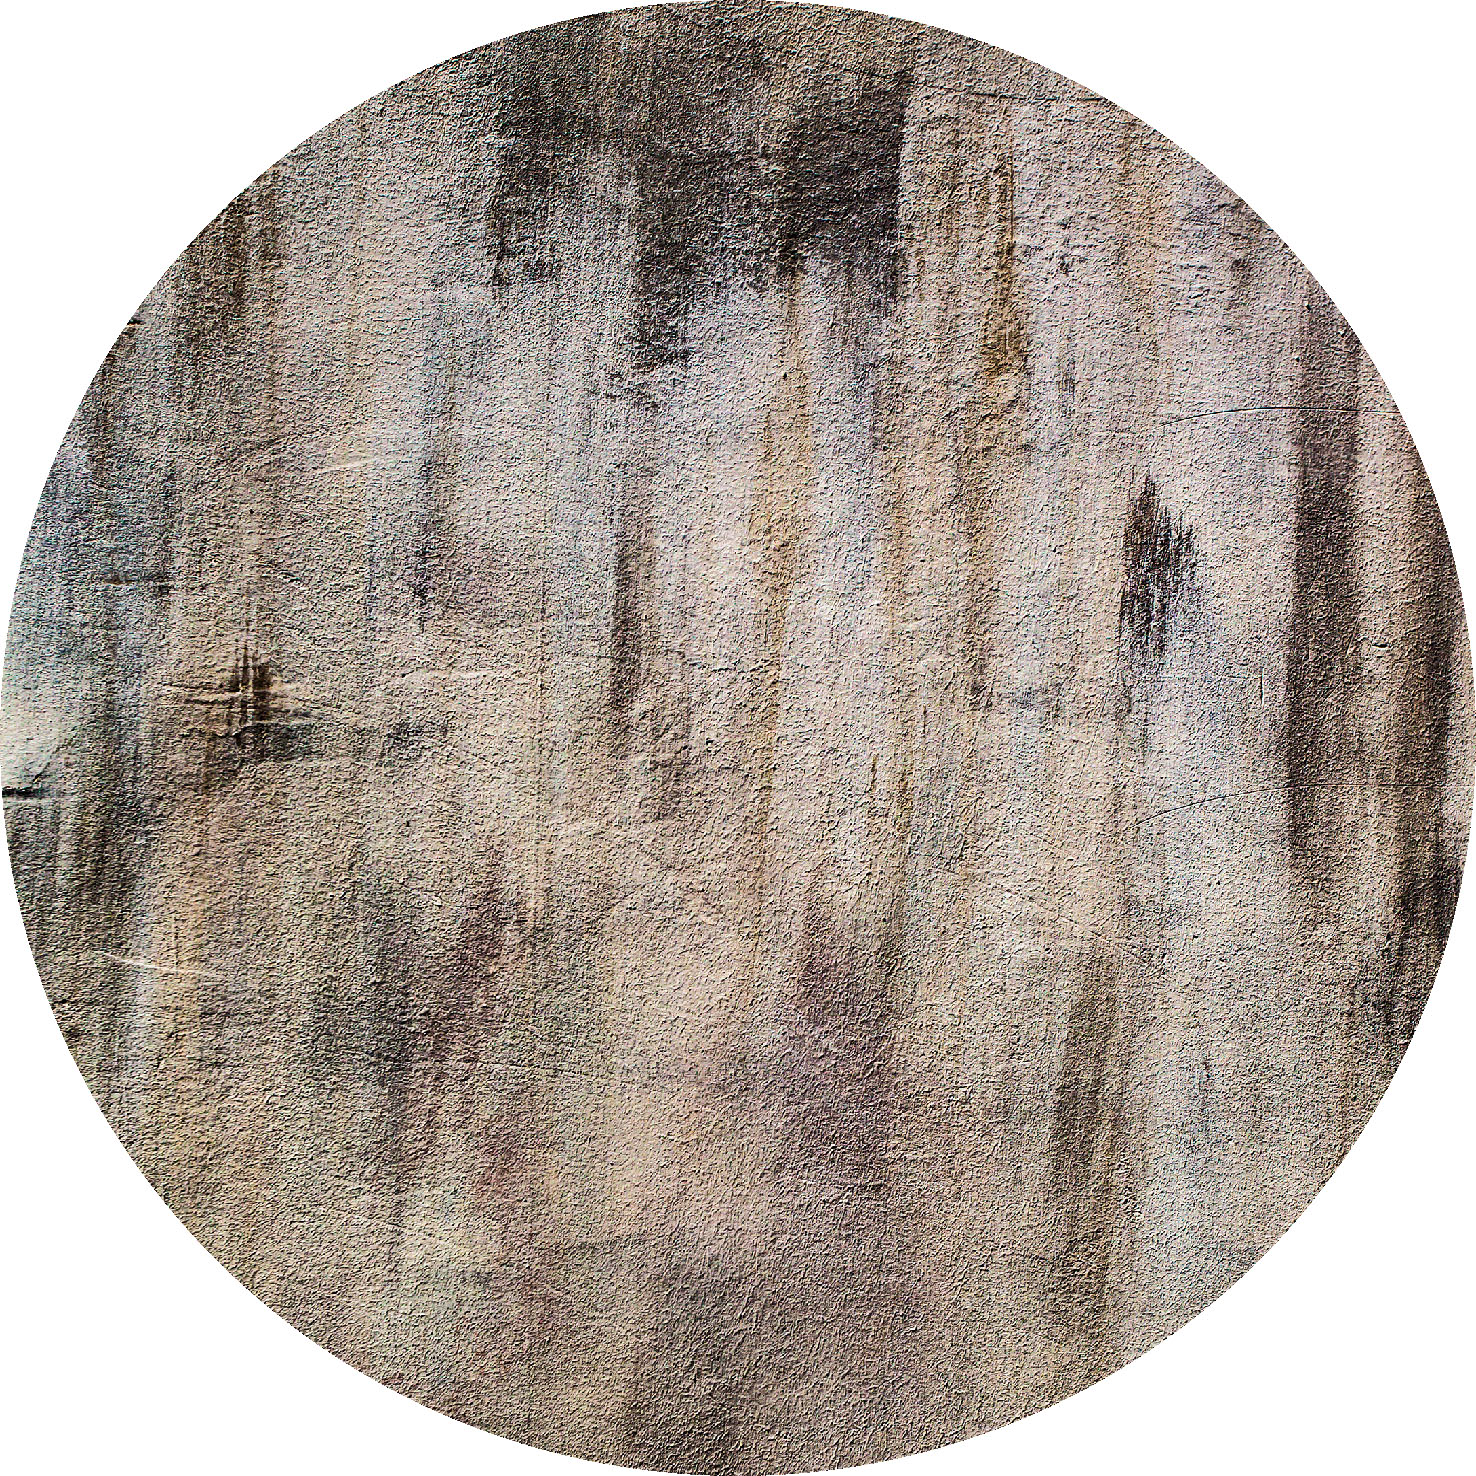 Rundt teppe - Polia (grå/brun)